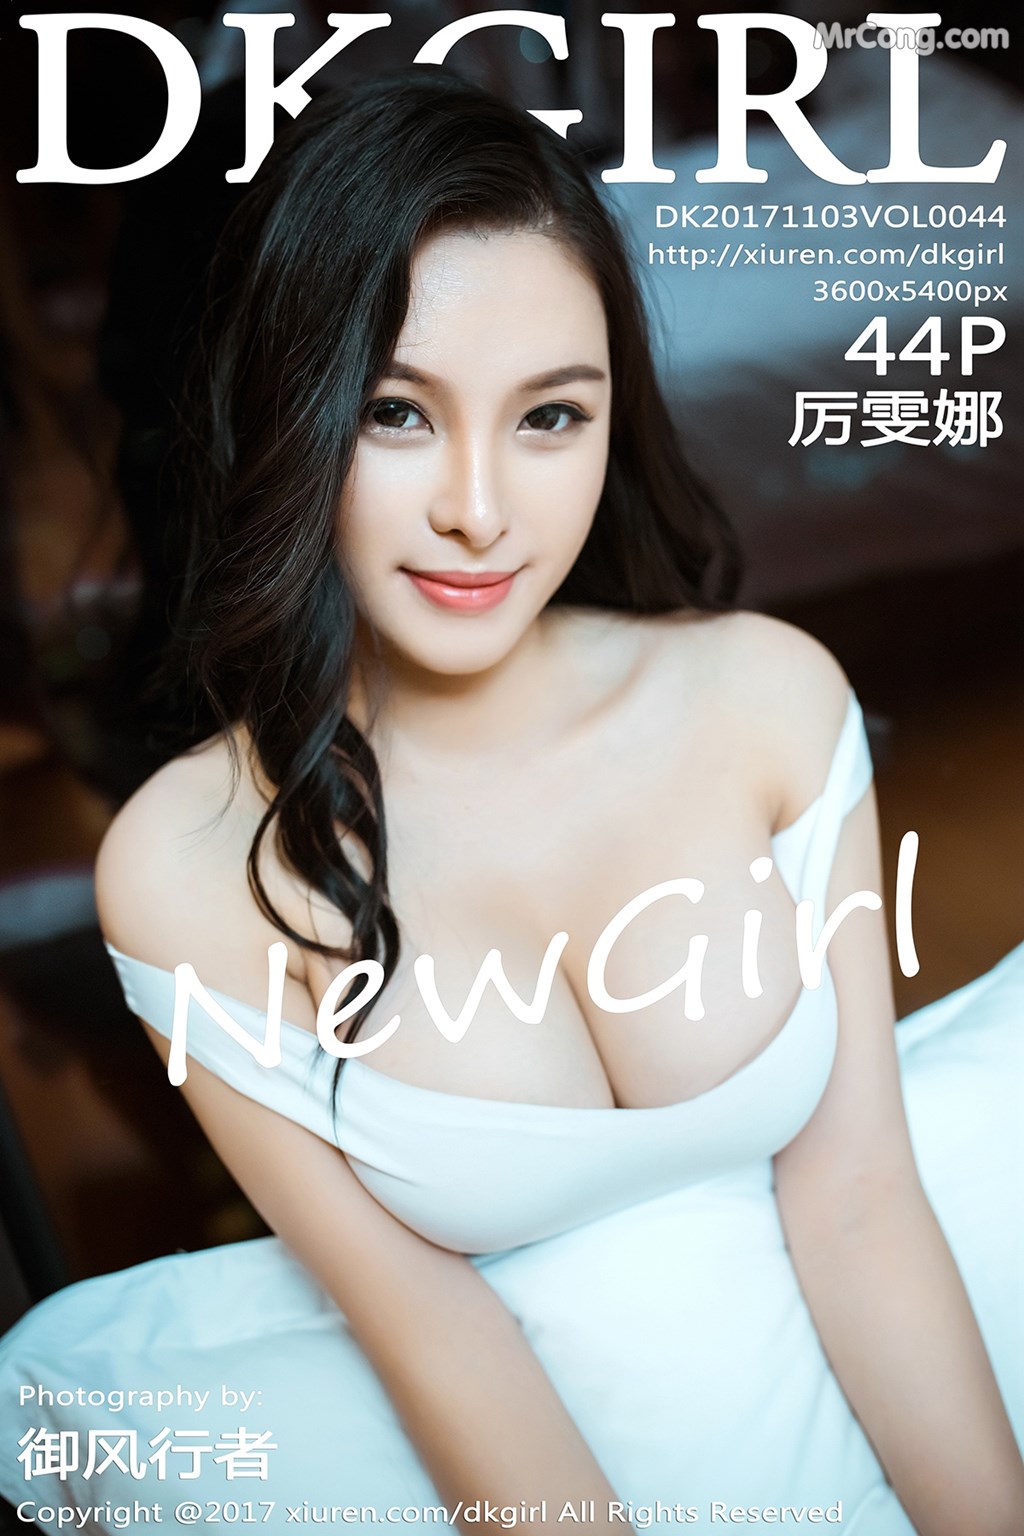 DKGirl Vol.044: Model Li Wen Na (厉雯娜) (45 pictures) photo 1-0